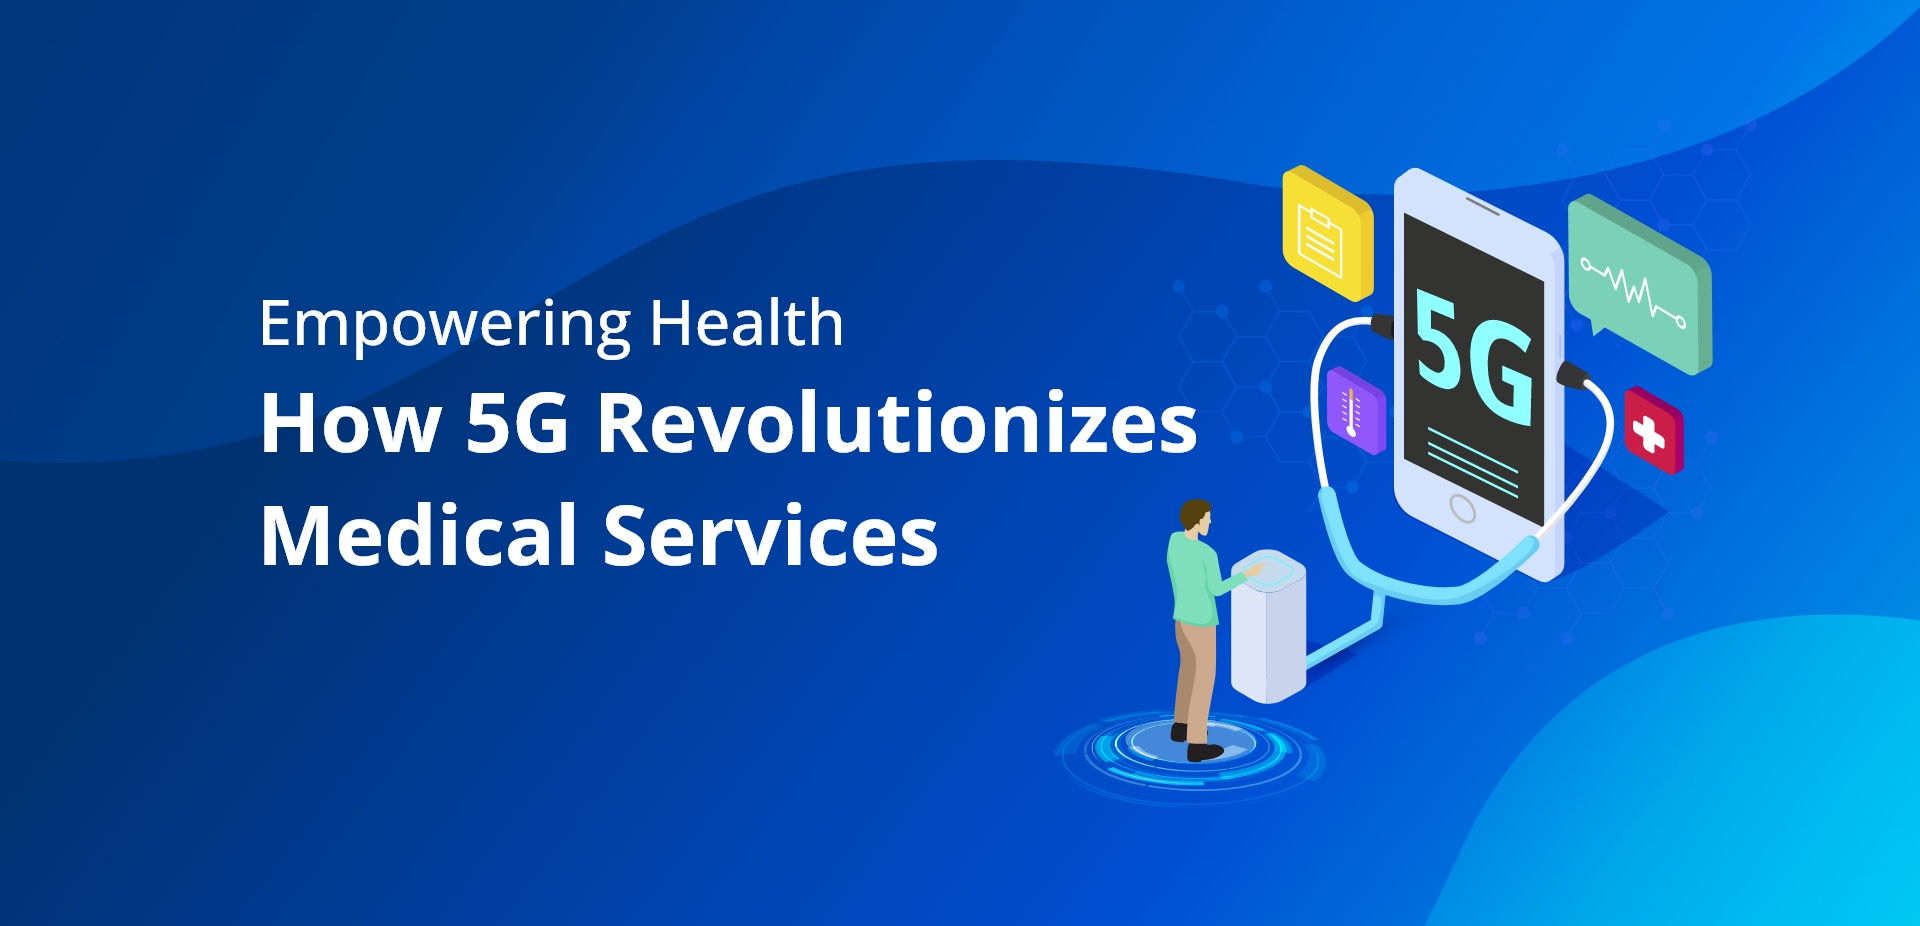 Empowering Health: How 5G Revolutionizes Medical Services